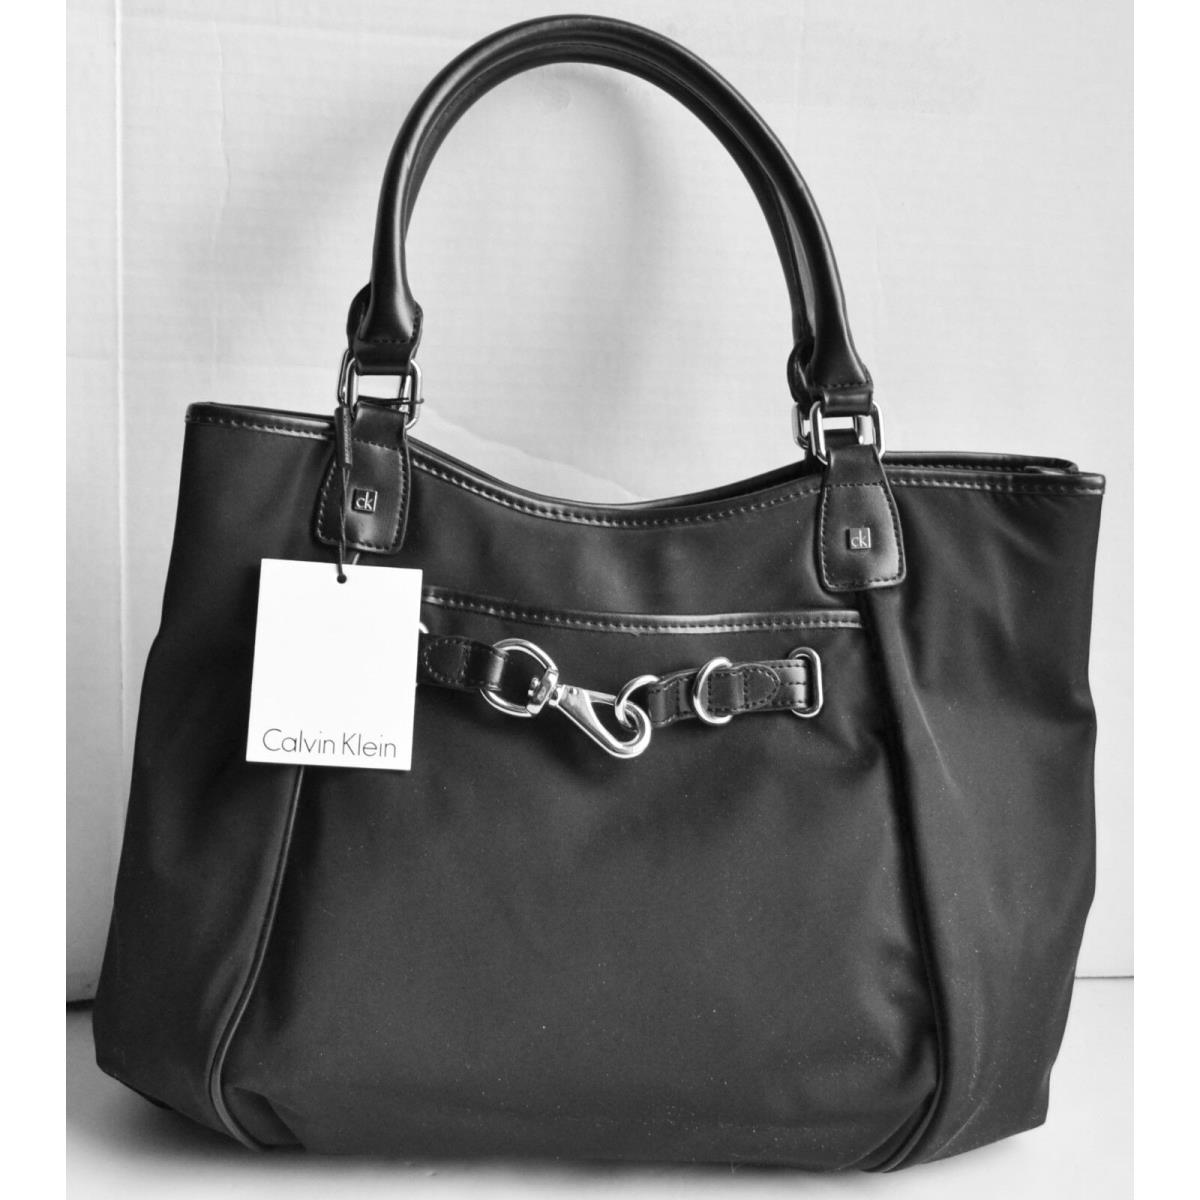 Calvin Klein Satchel Black Bag Handbag Sac Bolsa